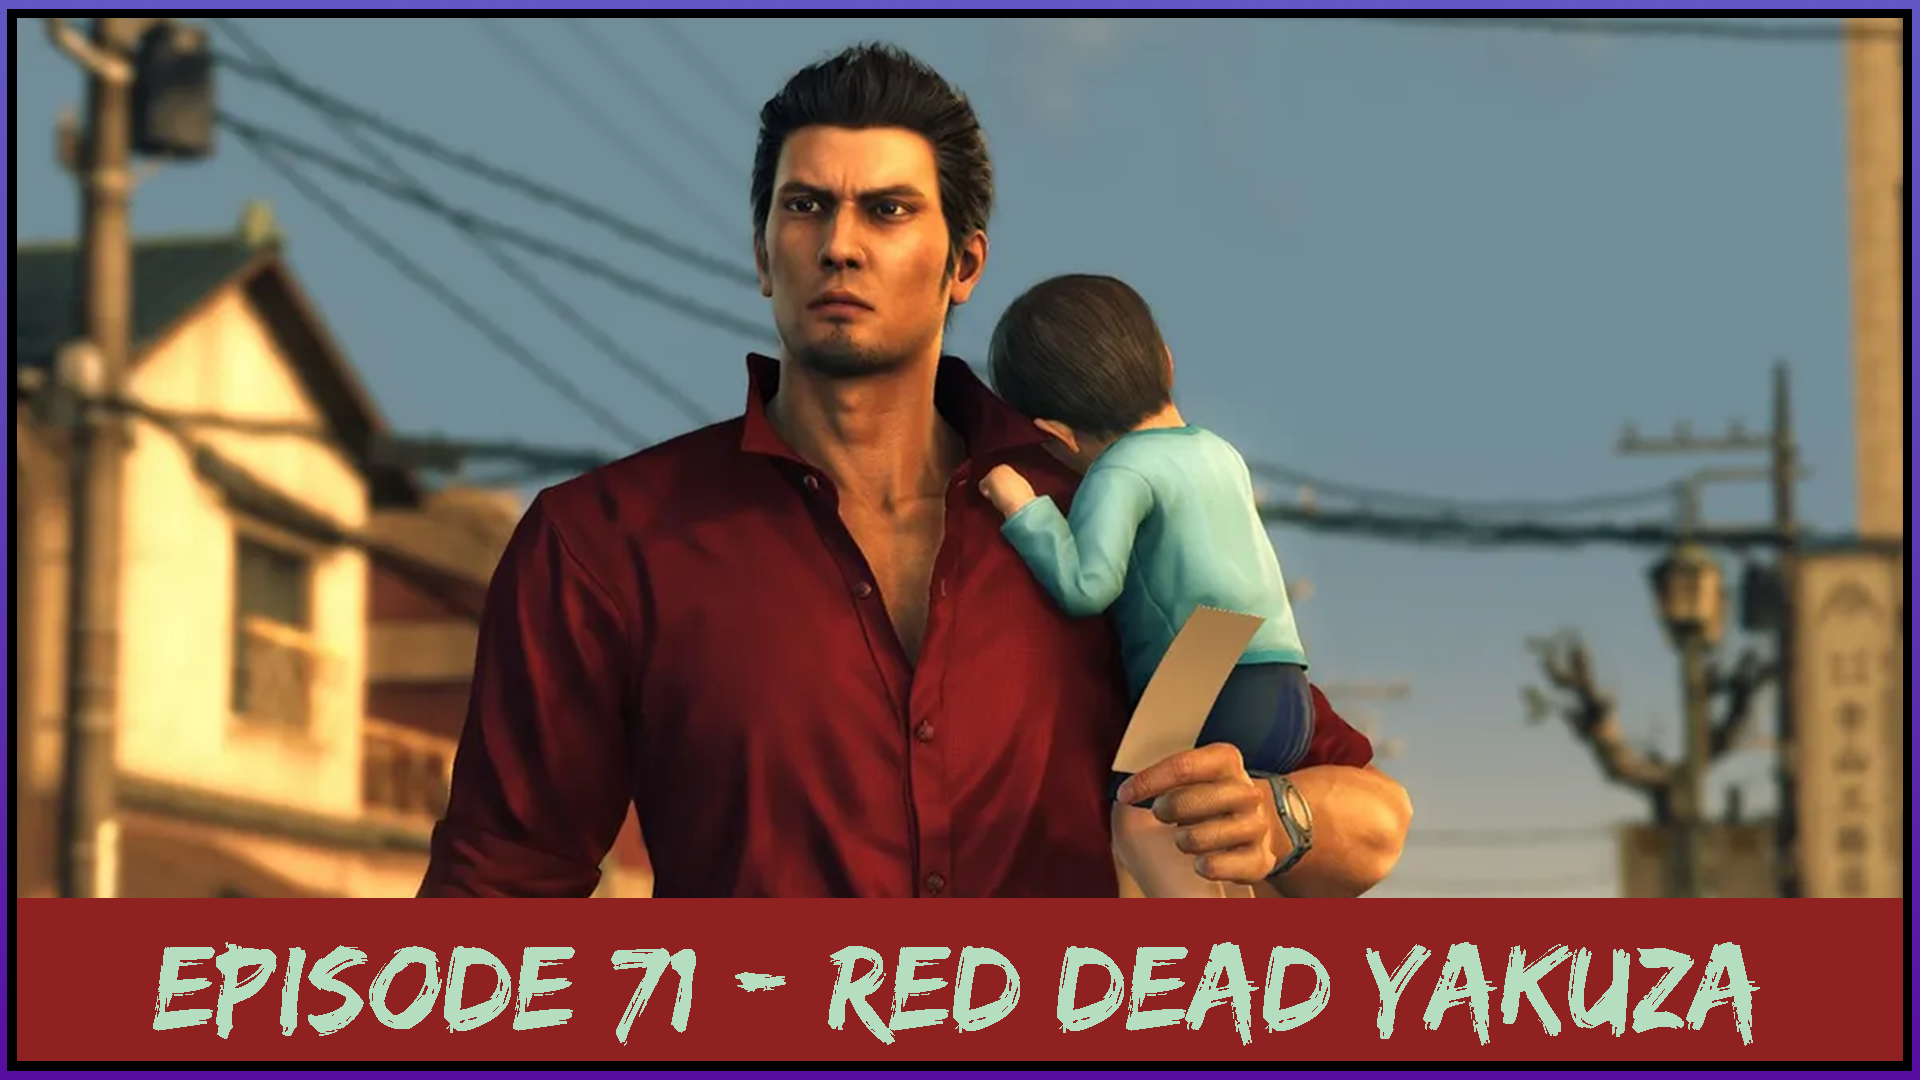 Episode 71 - Red Dead Yakuza